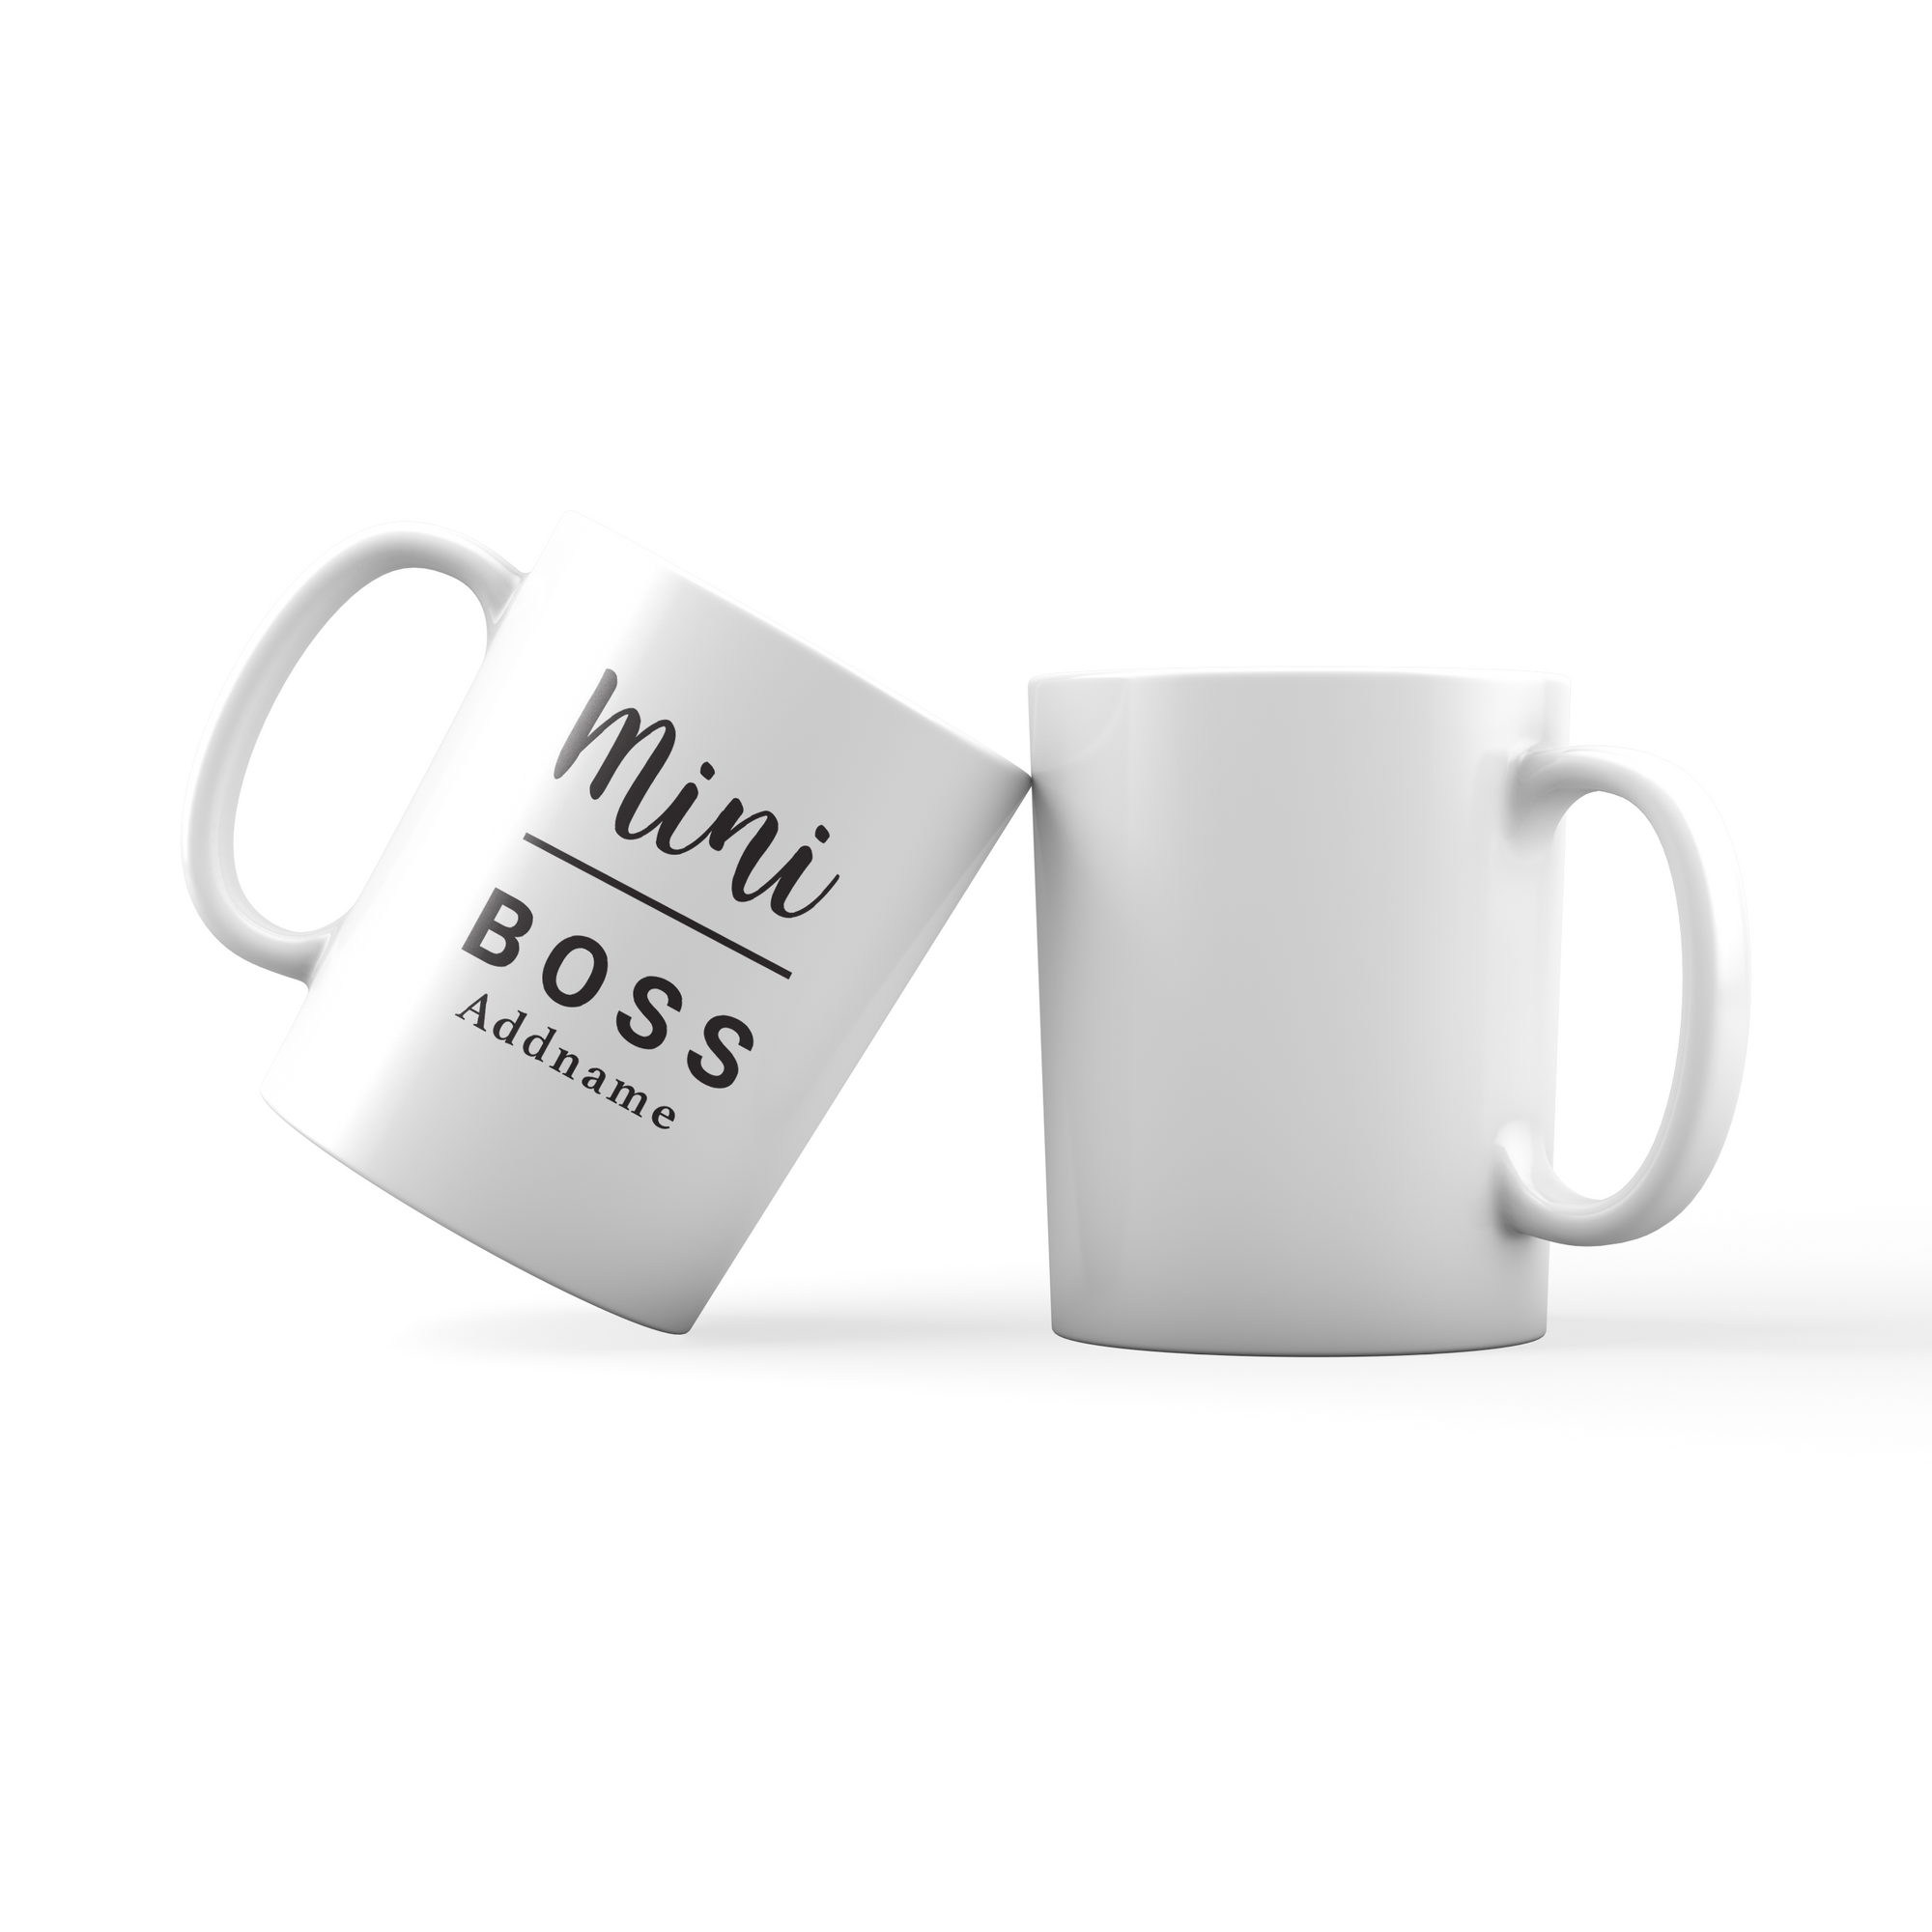 Mini Boss Addname Mug